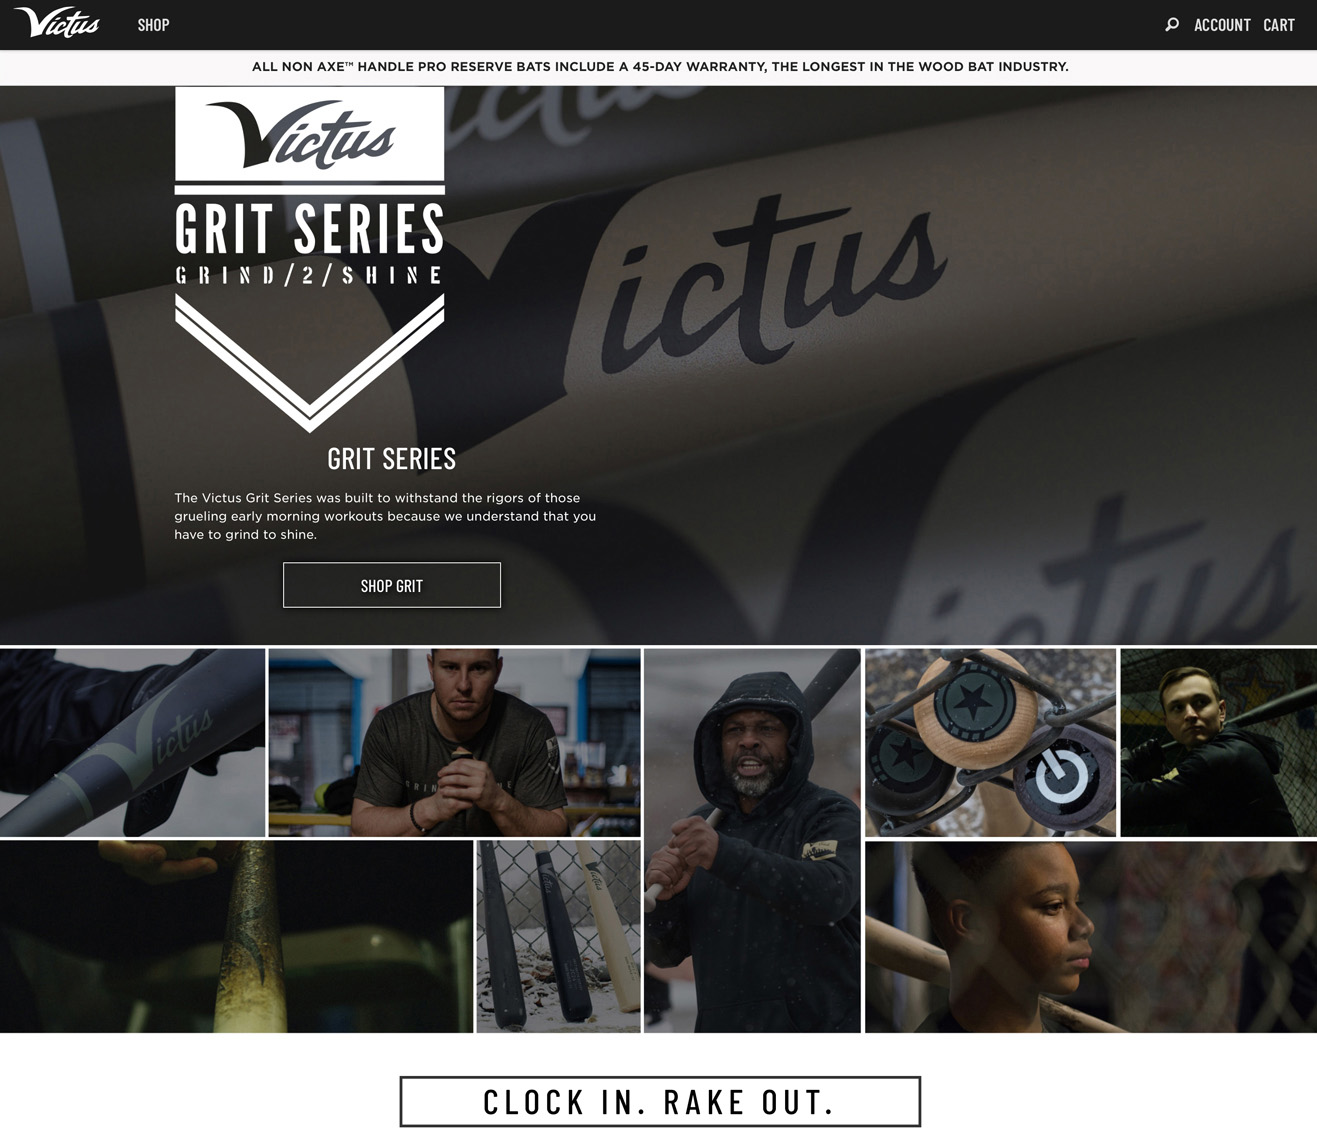 Victus Grit Series